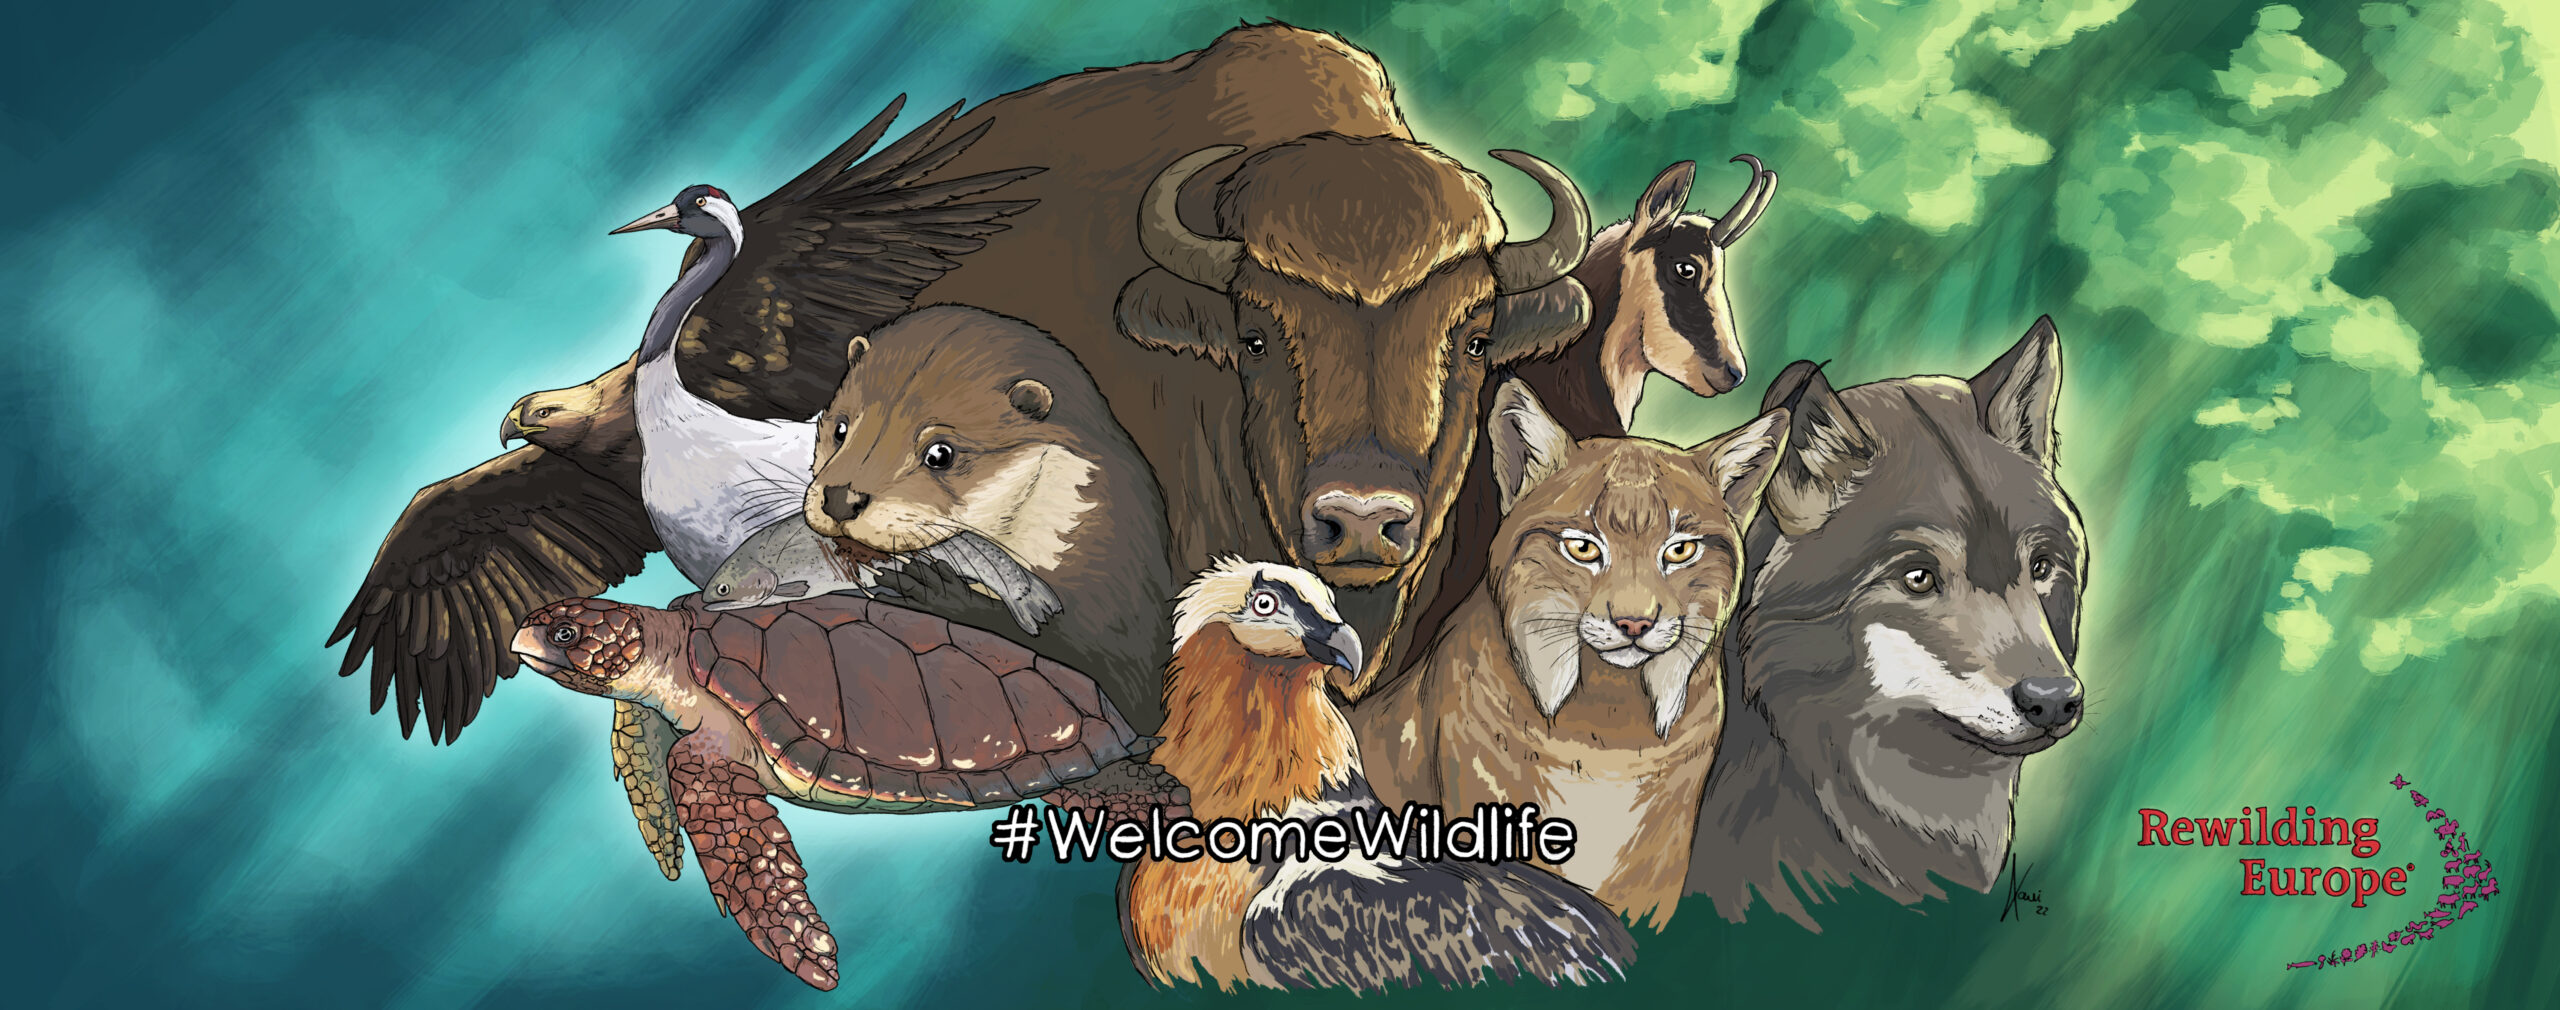 Wildlife Comeback banner #welcomewildlife